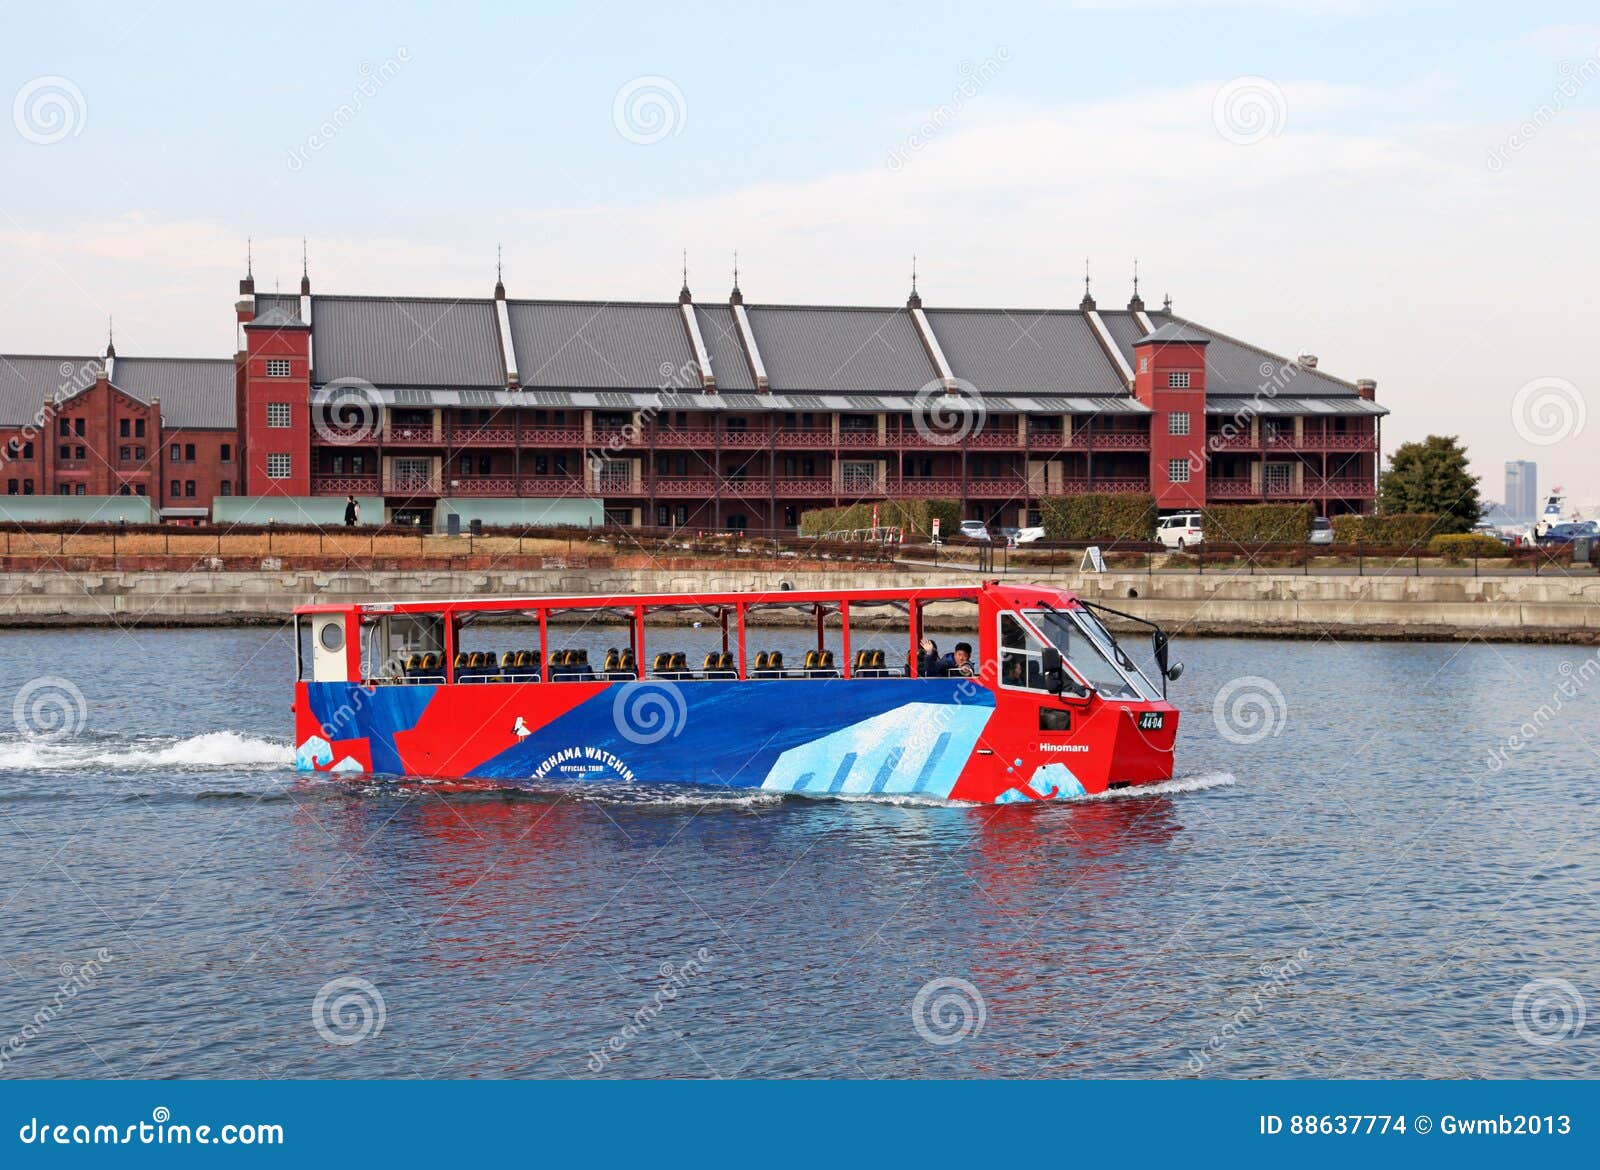 amphibious bus tour yokohama editorial stock image - image